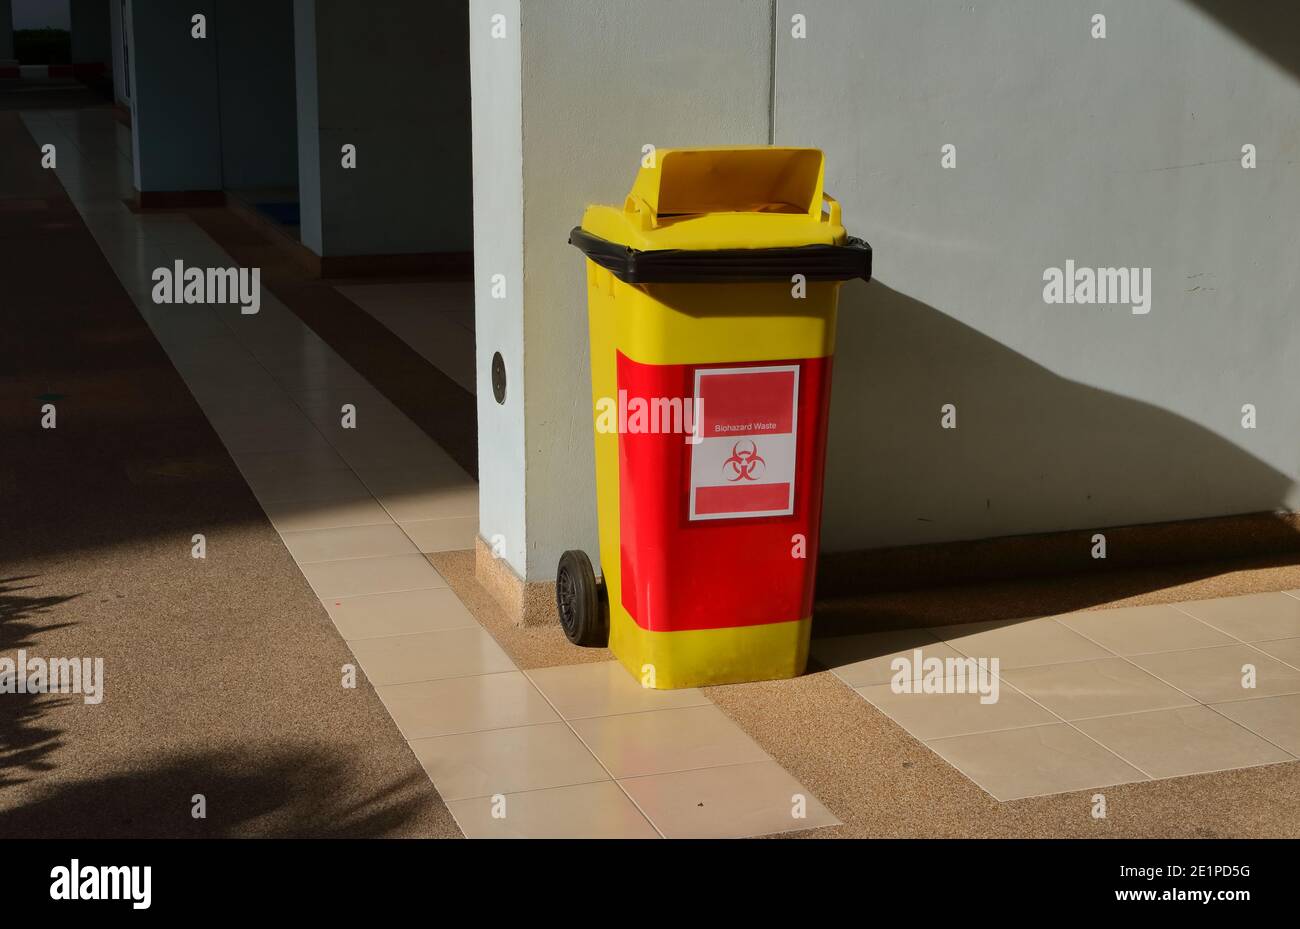 Biohazard waste bin standing on tiled floor against blue wall under sunlight Stock Photo